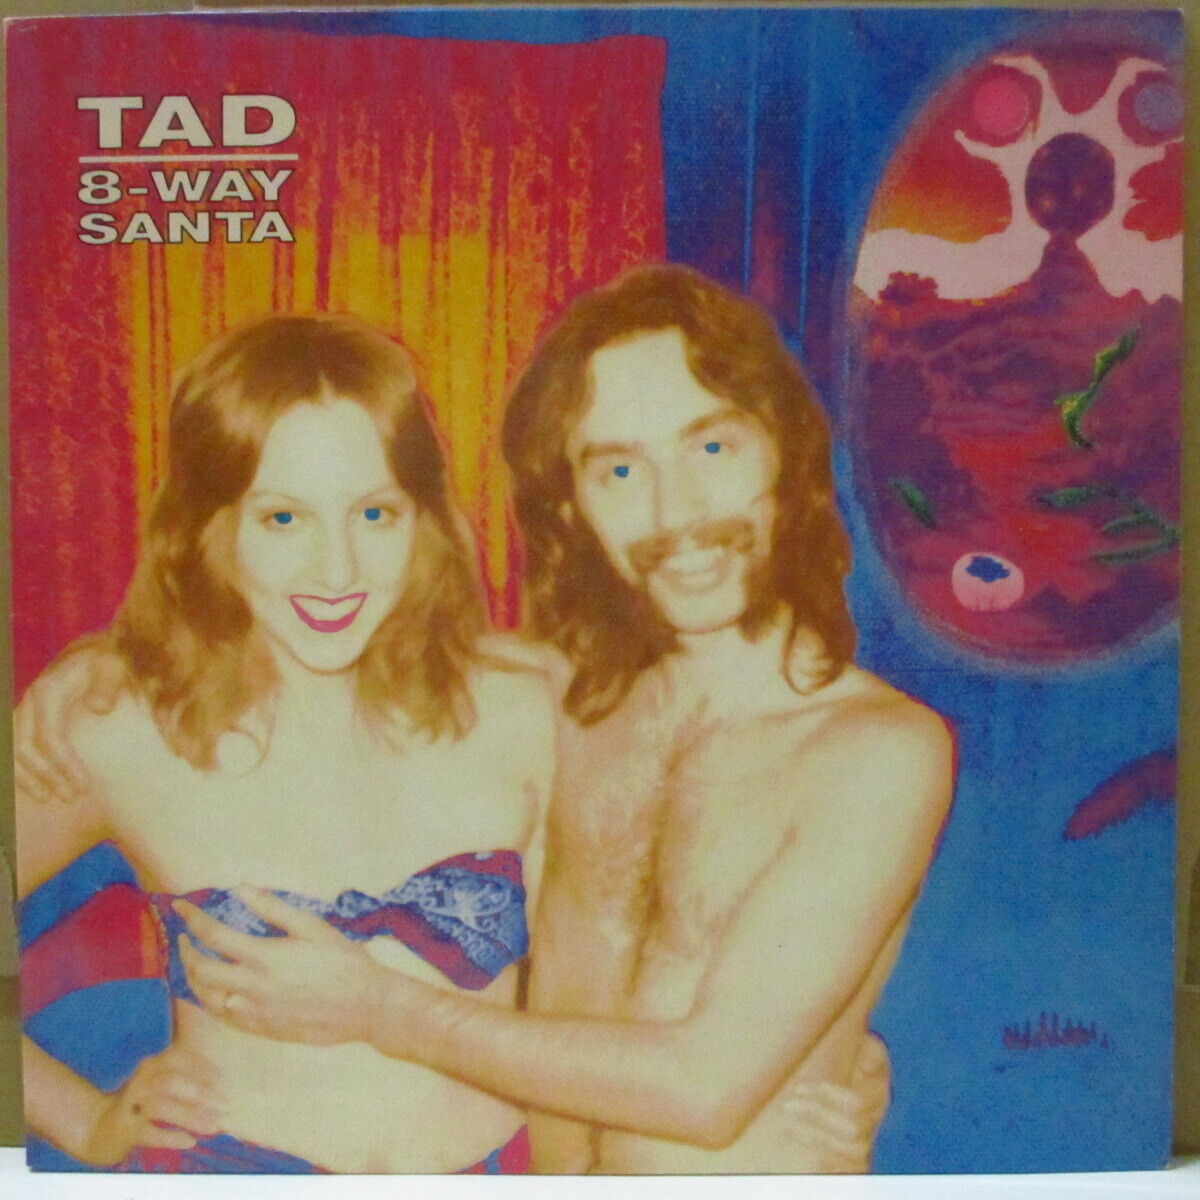 Tad-8-Way Santa German Limited Yellow Vinyl Lp